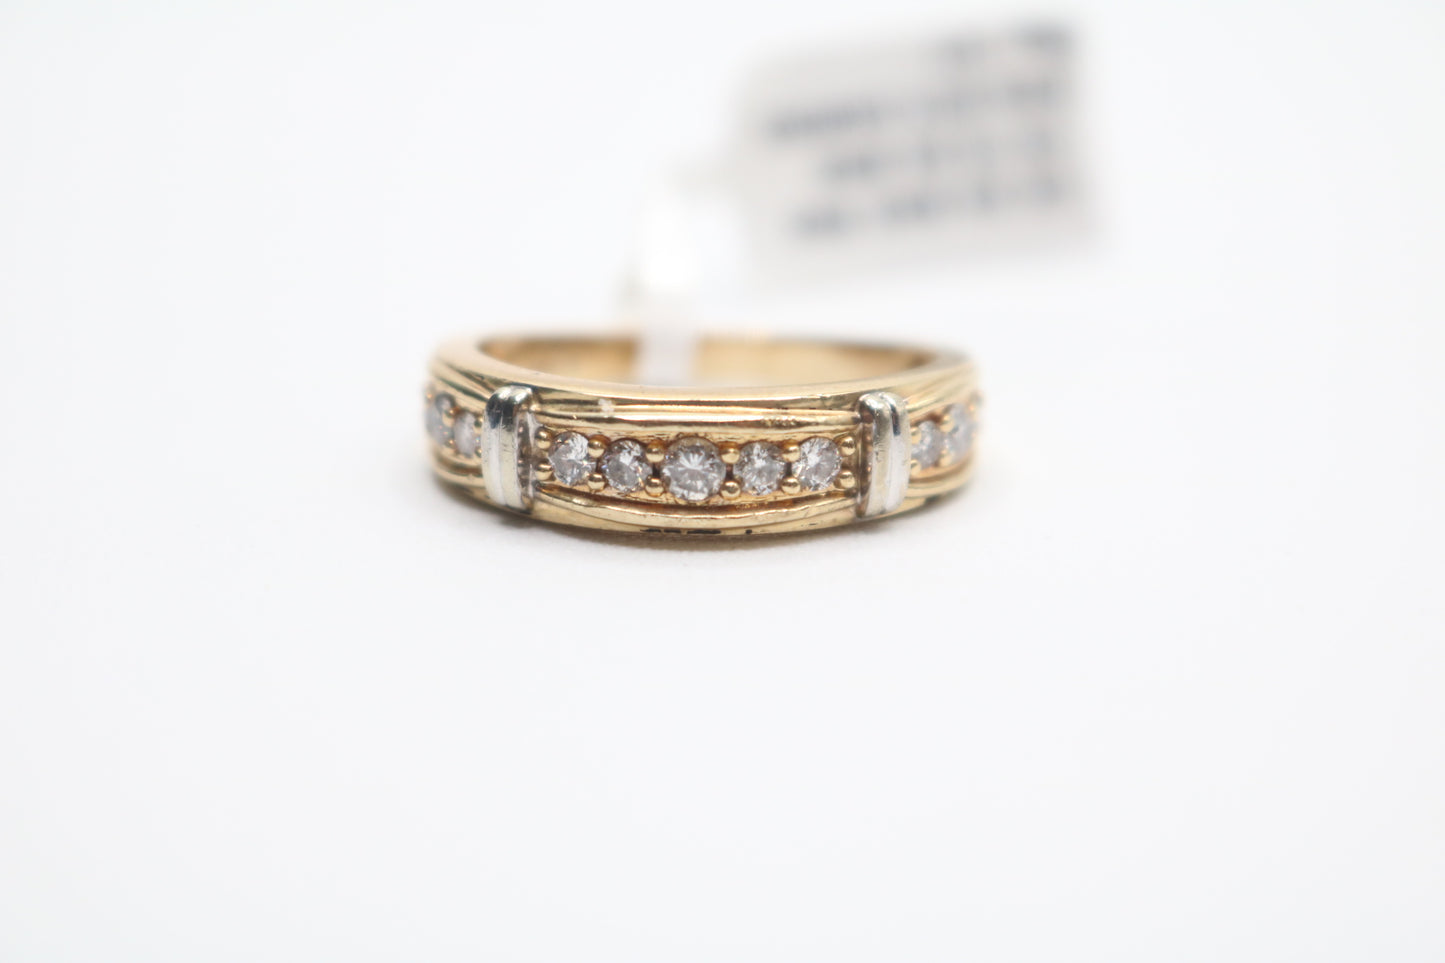 10K 2 Tone Gold Diamond Engagement Ring (Size 9)